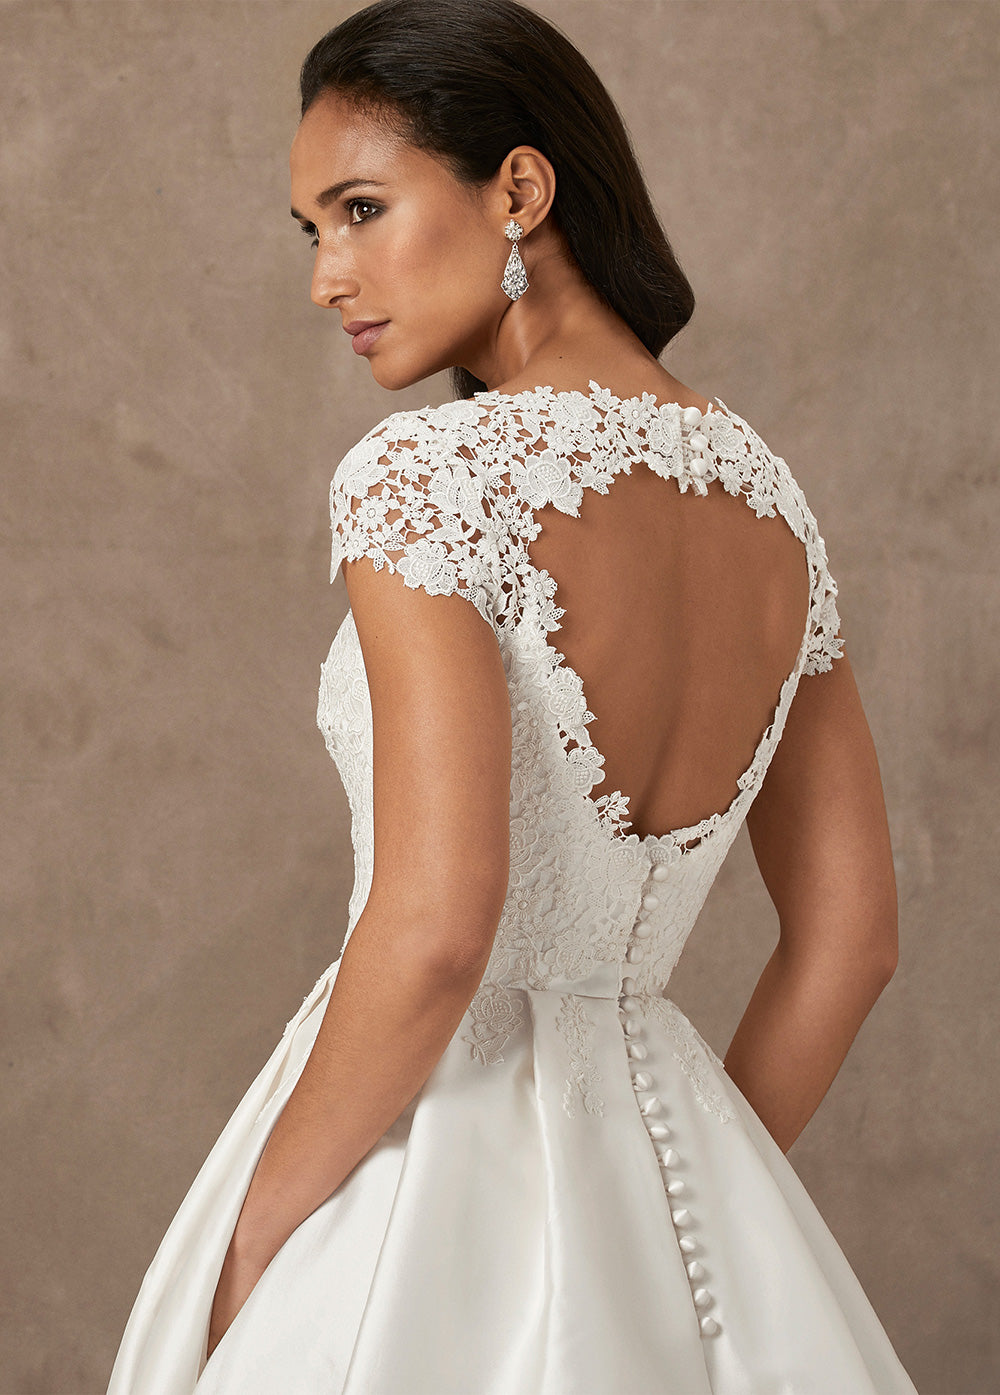 En Fleur luxury wedding gown by Caroline Castigliano